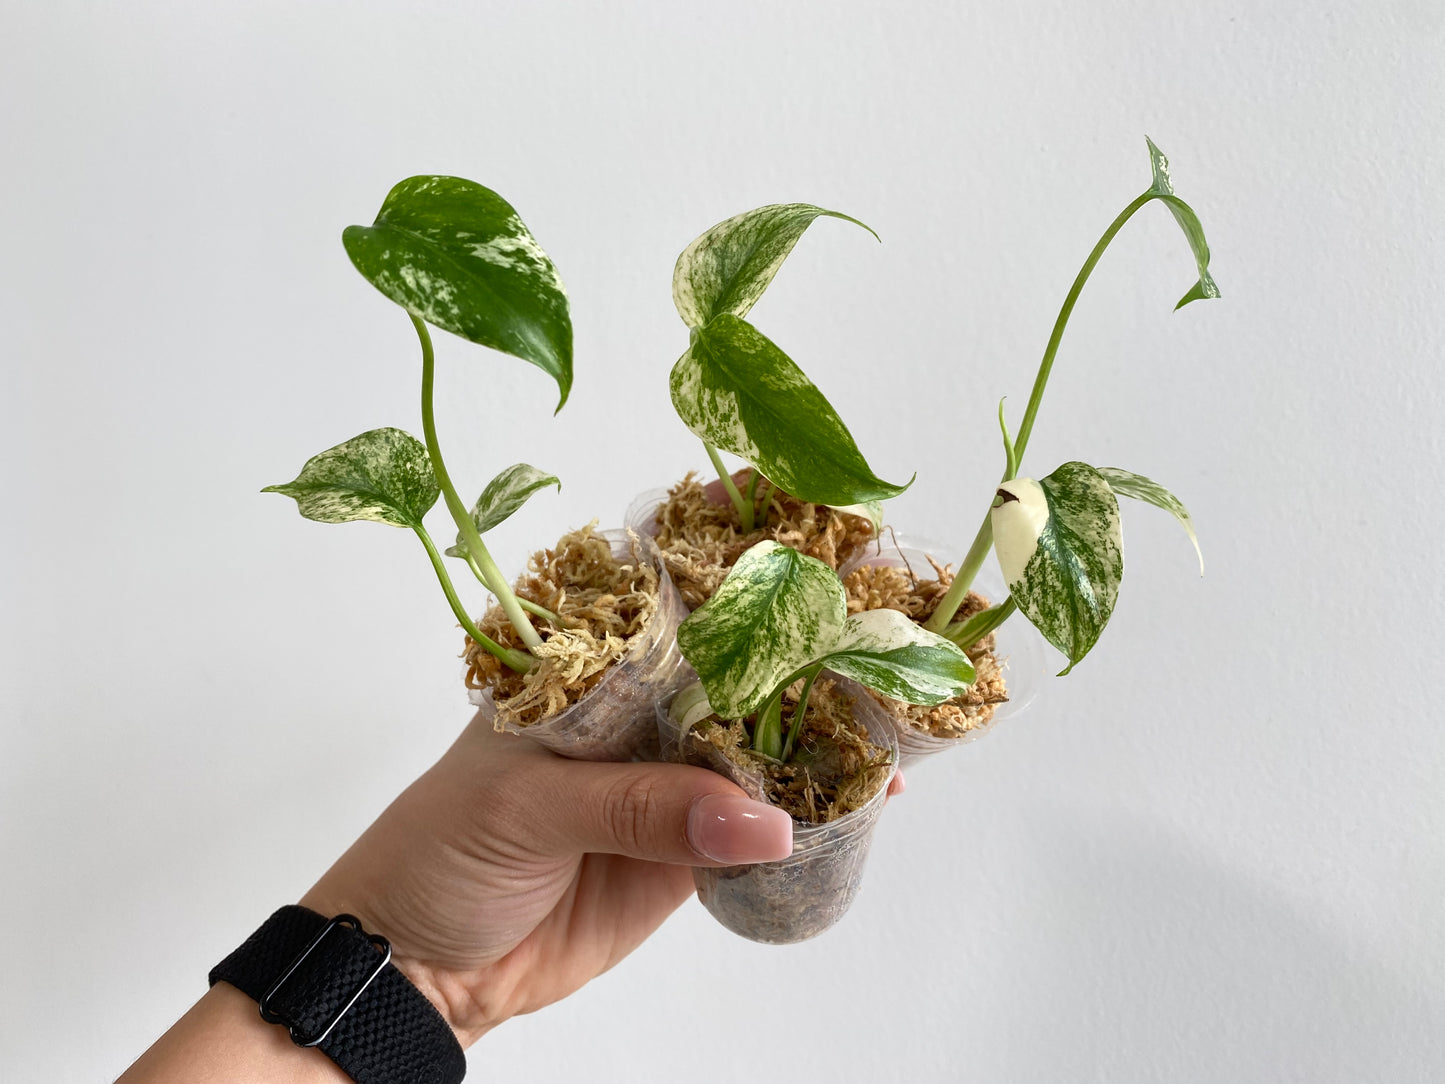 Monstera deliciosa "Mint" variegated premium TC Plantlet